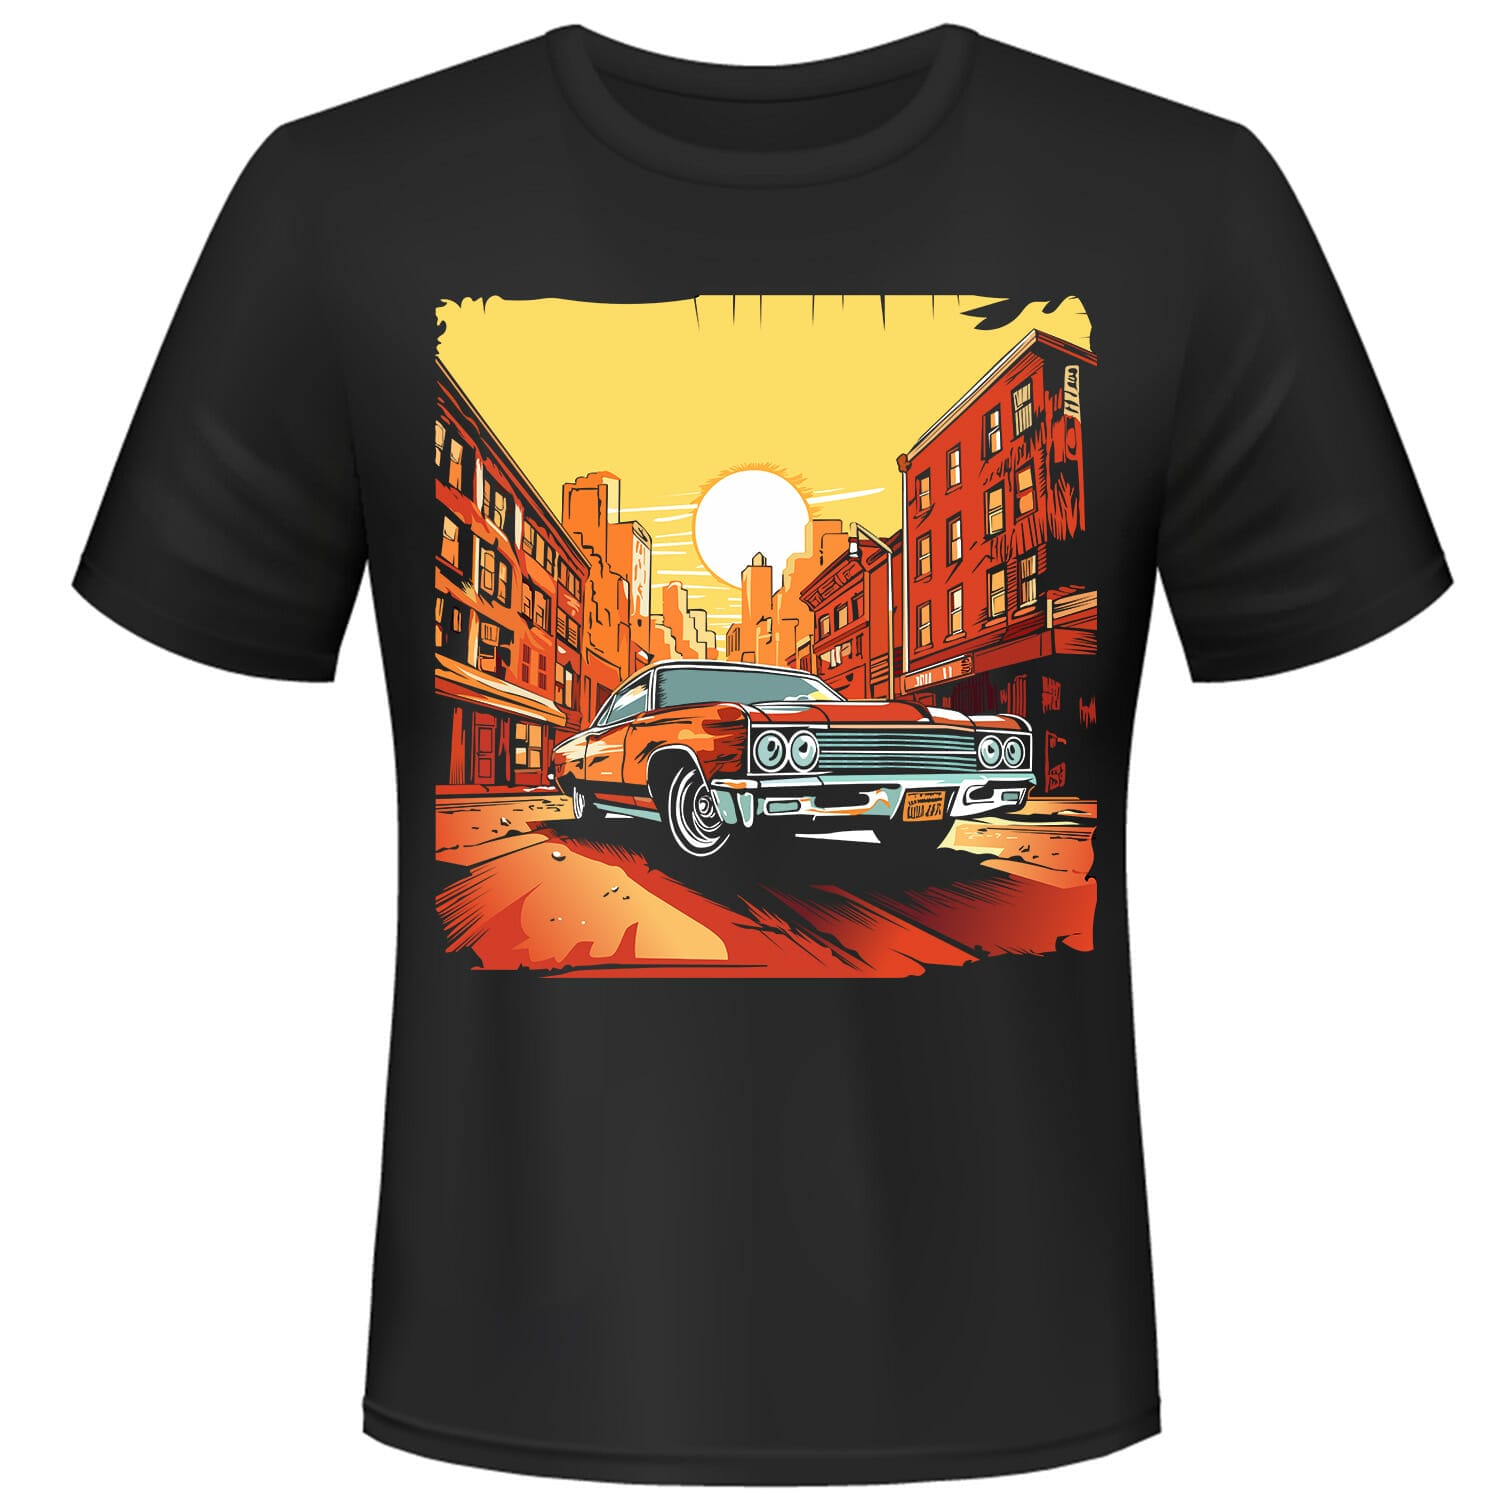 pop art style city scene shirt design